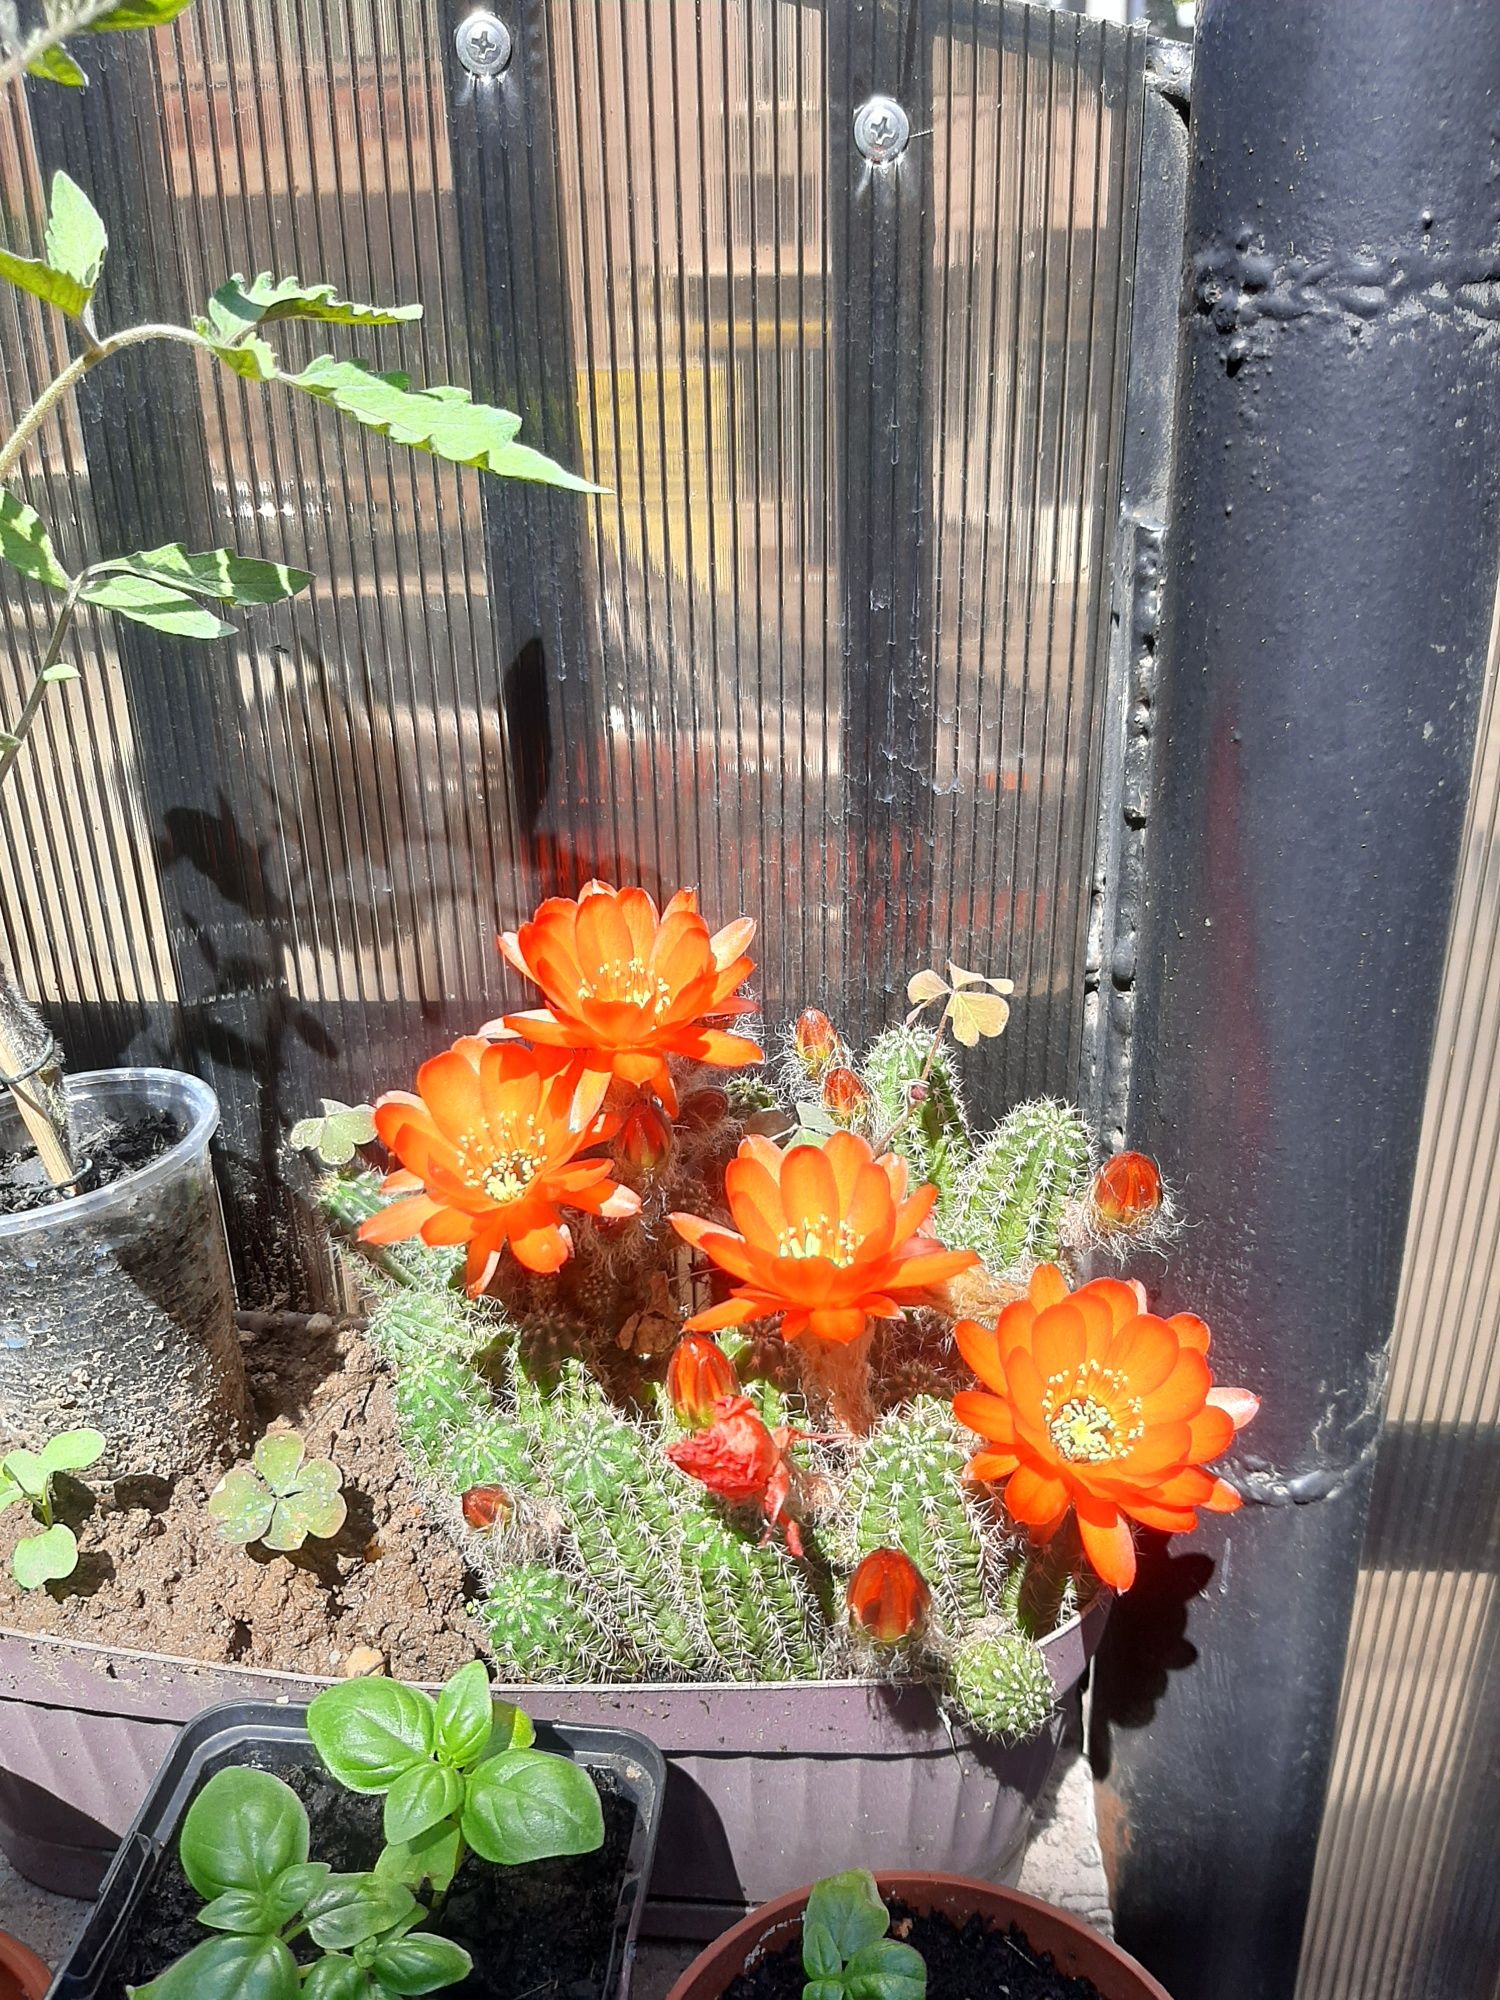 Vand Cactus care face  flori roșii.